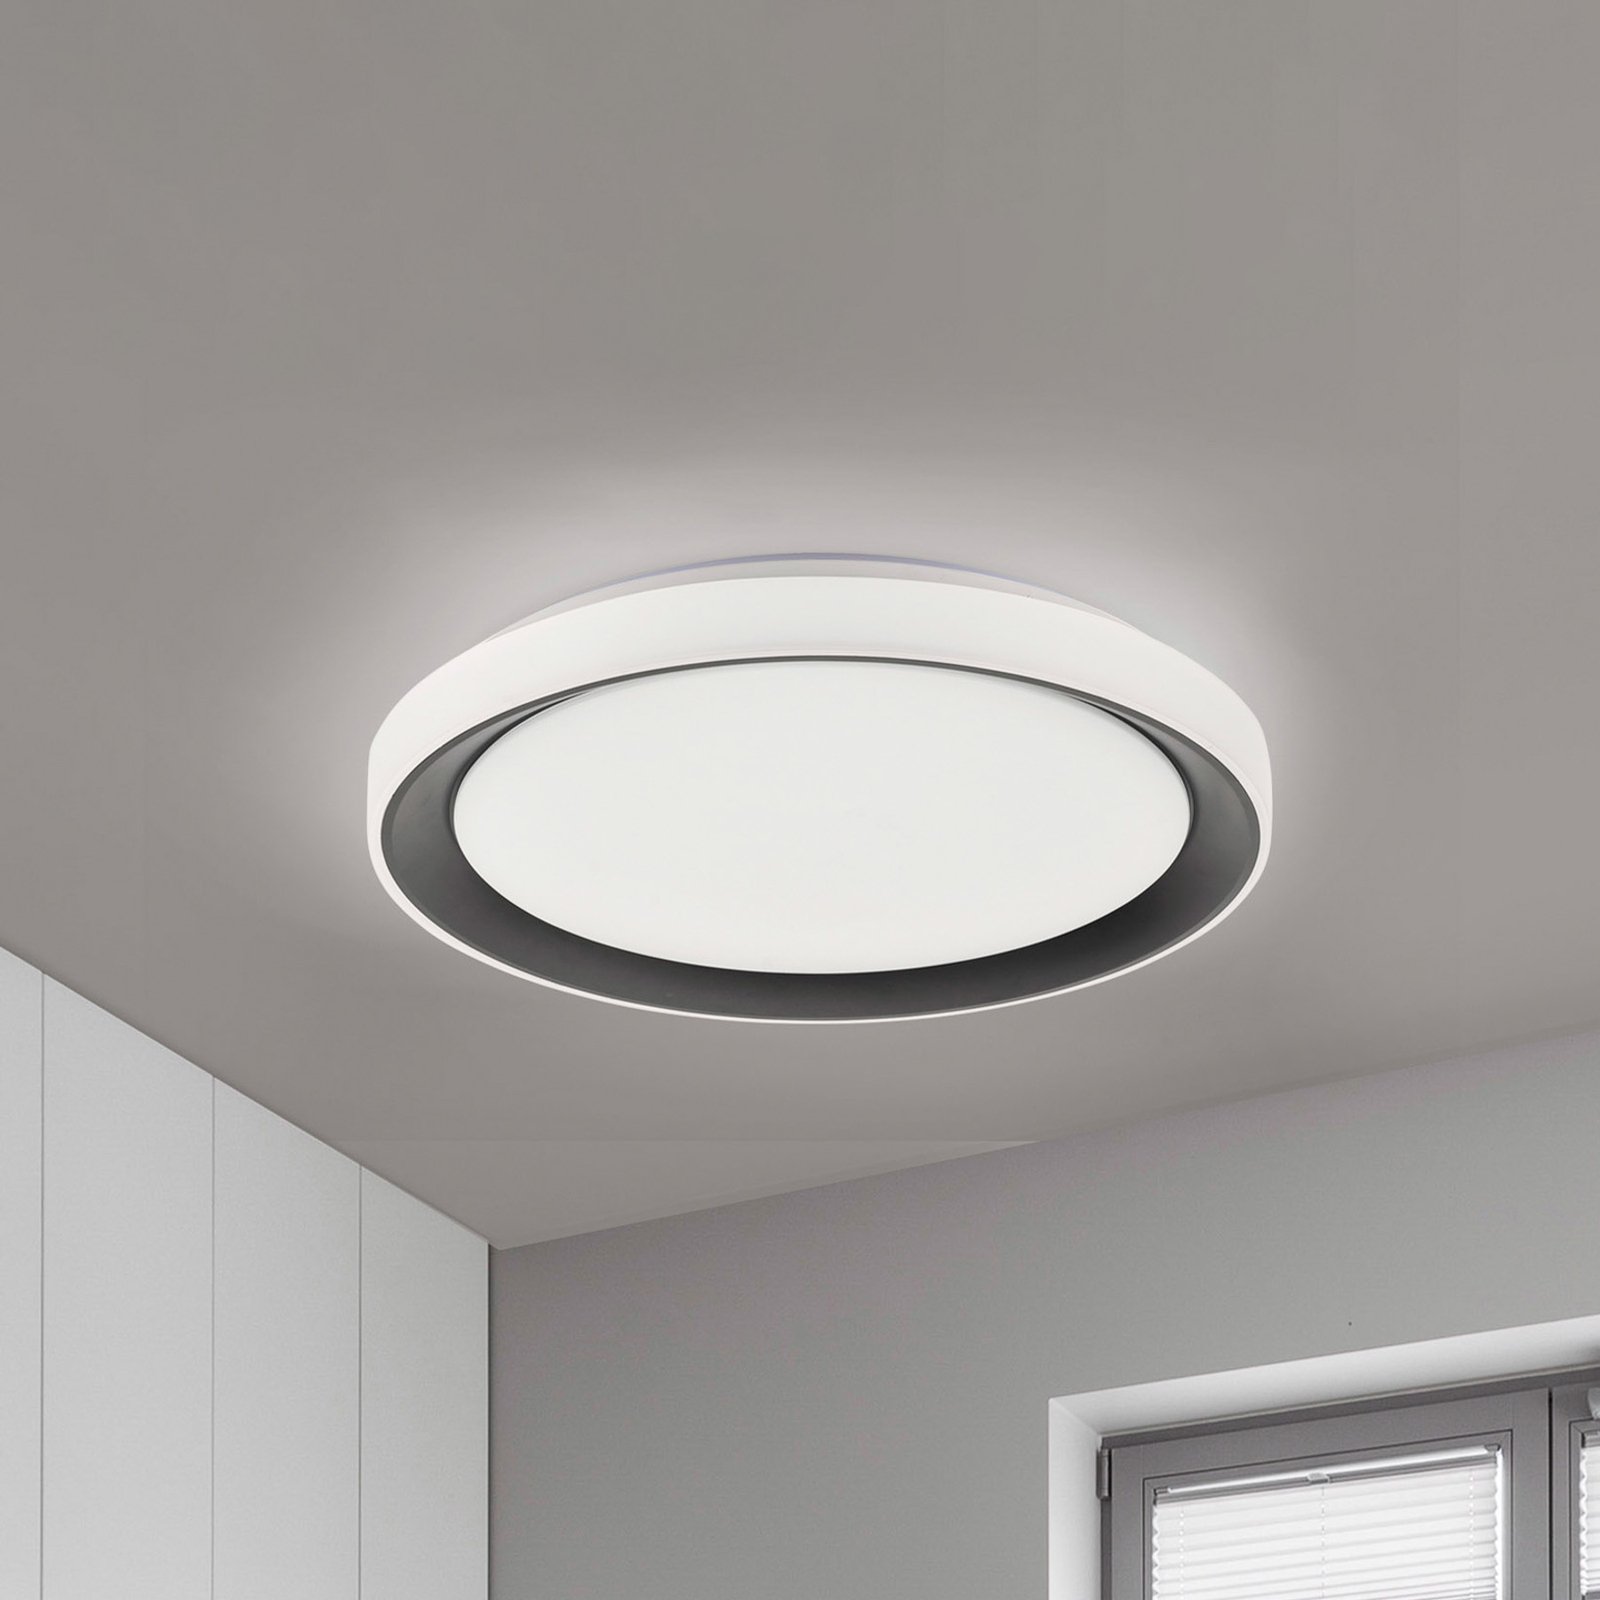 LOLA Smart Disc LED plafondlamp zwart/wit, RGBW